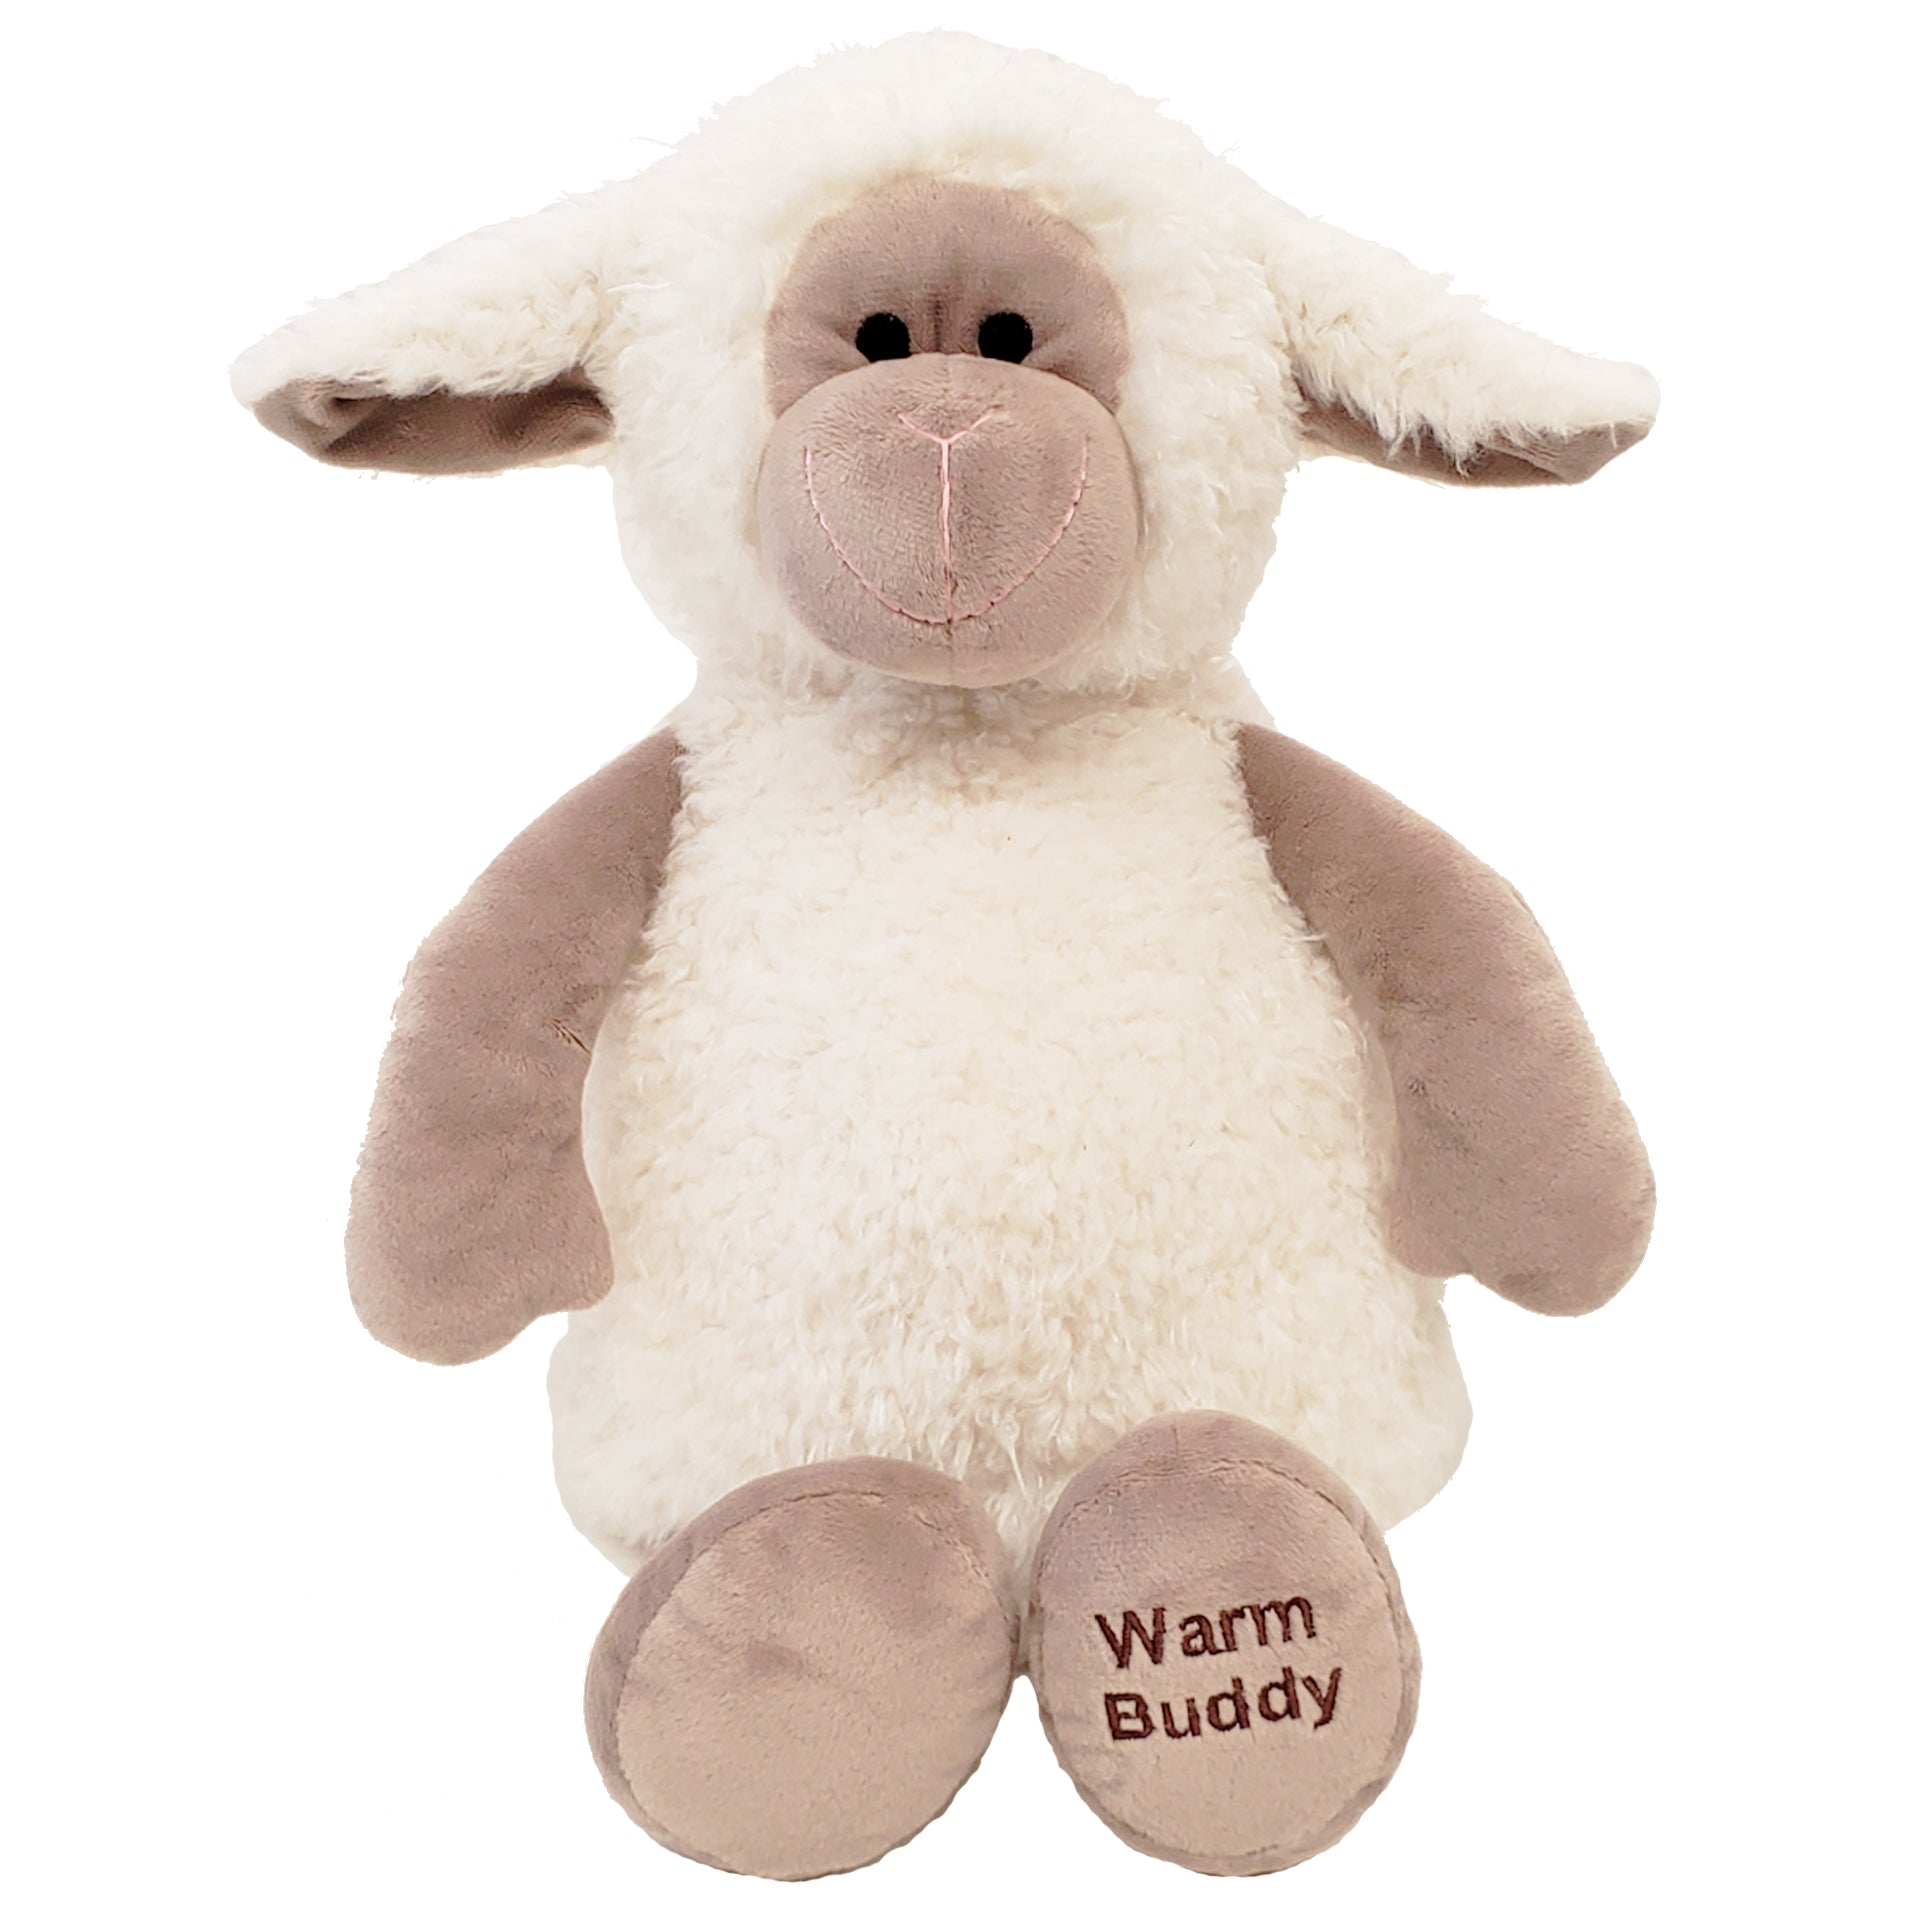 Cuddle Buddy Wooly - Heated Stuffed Animal